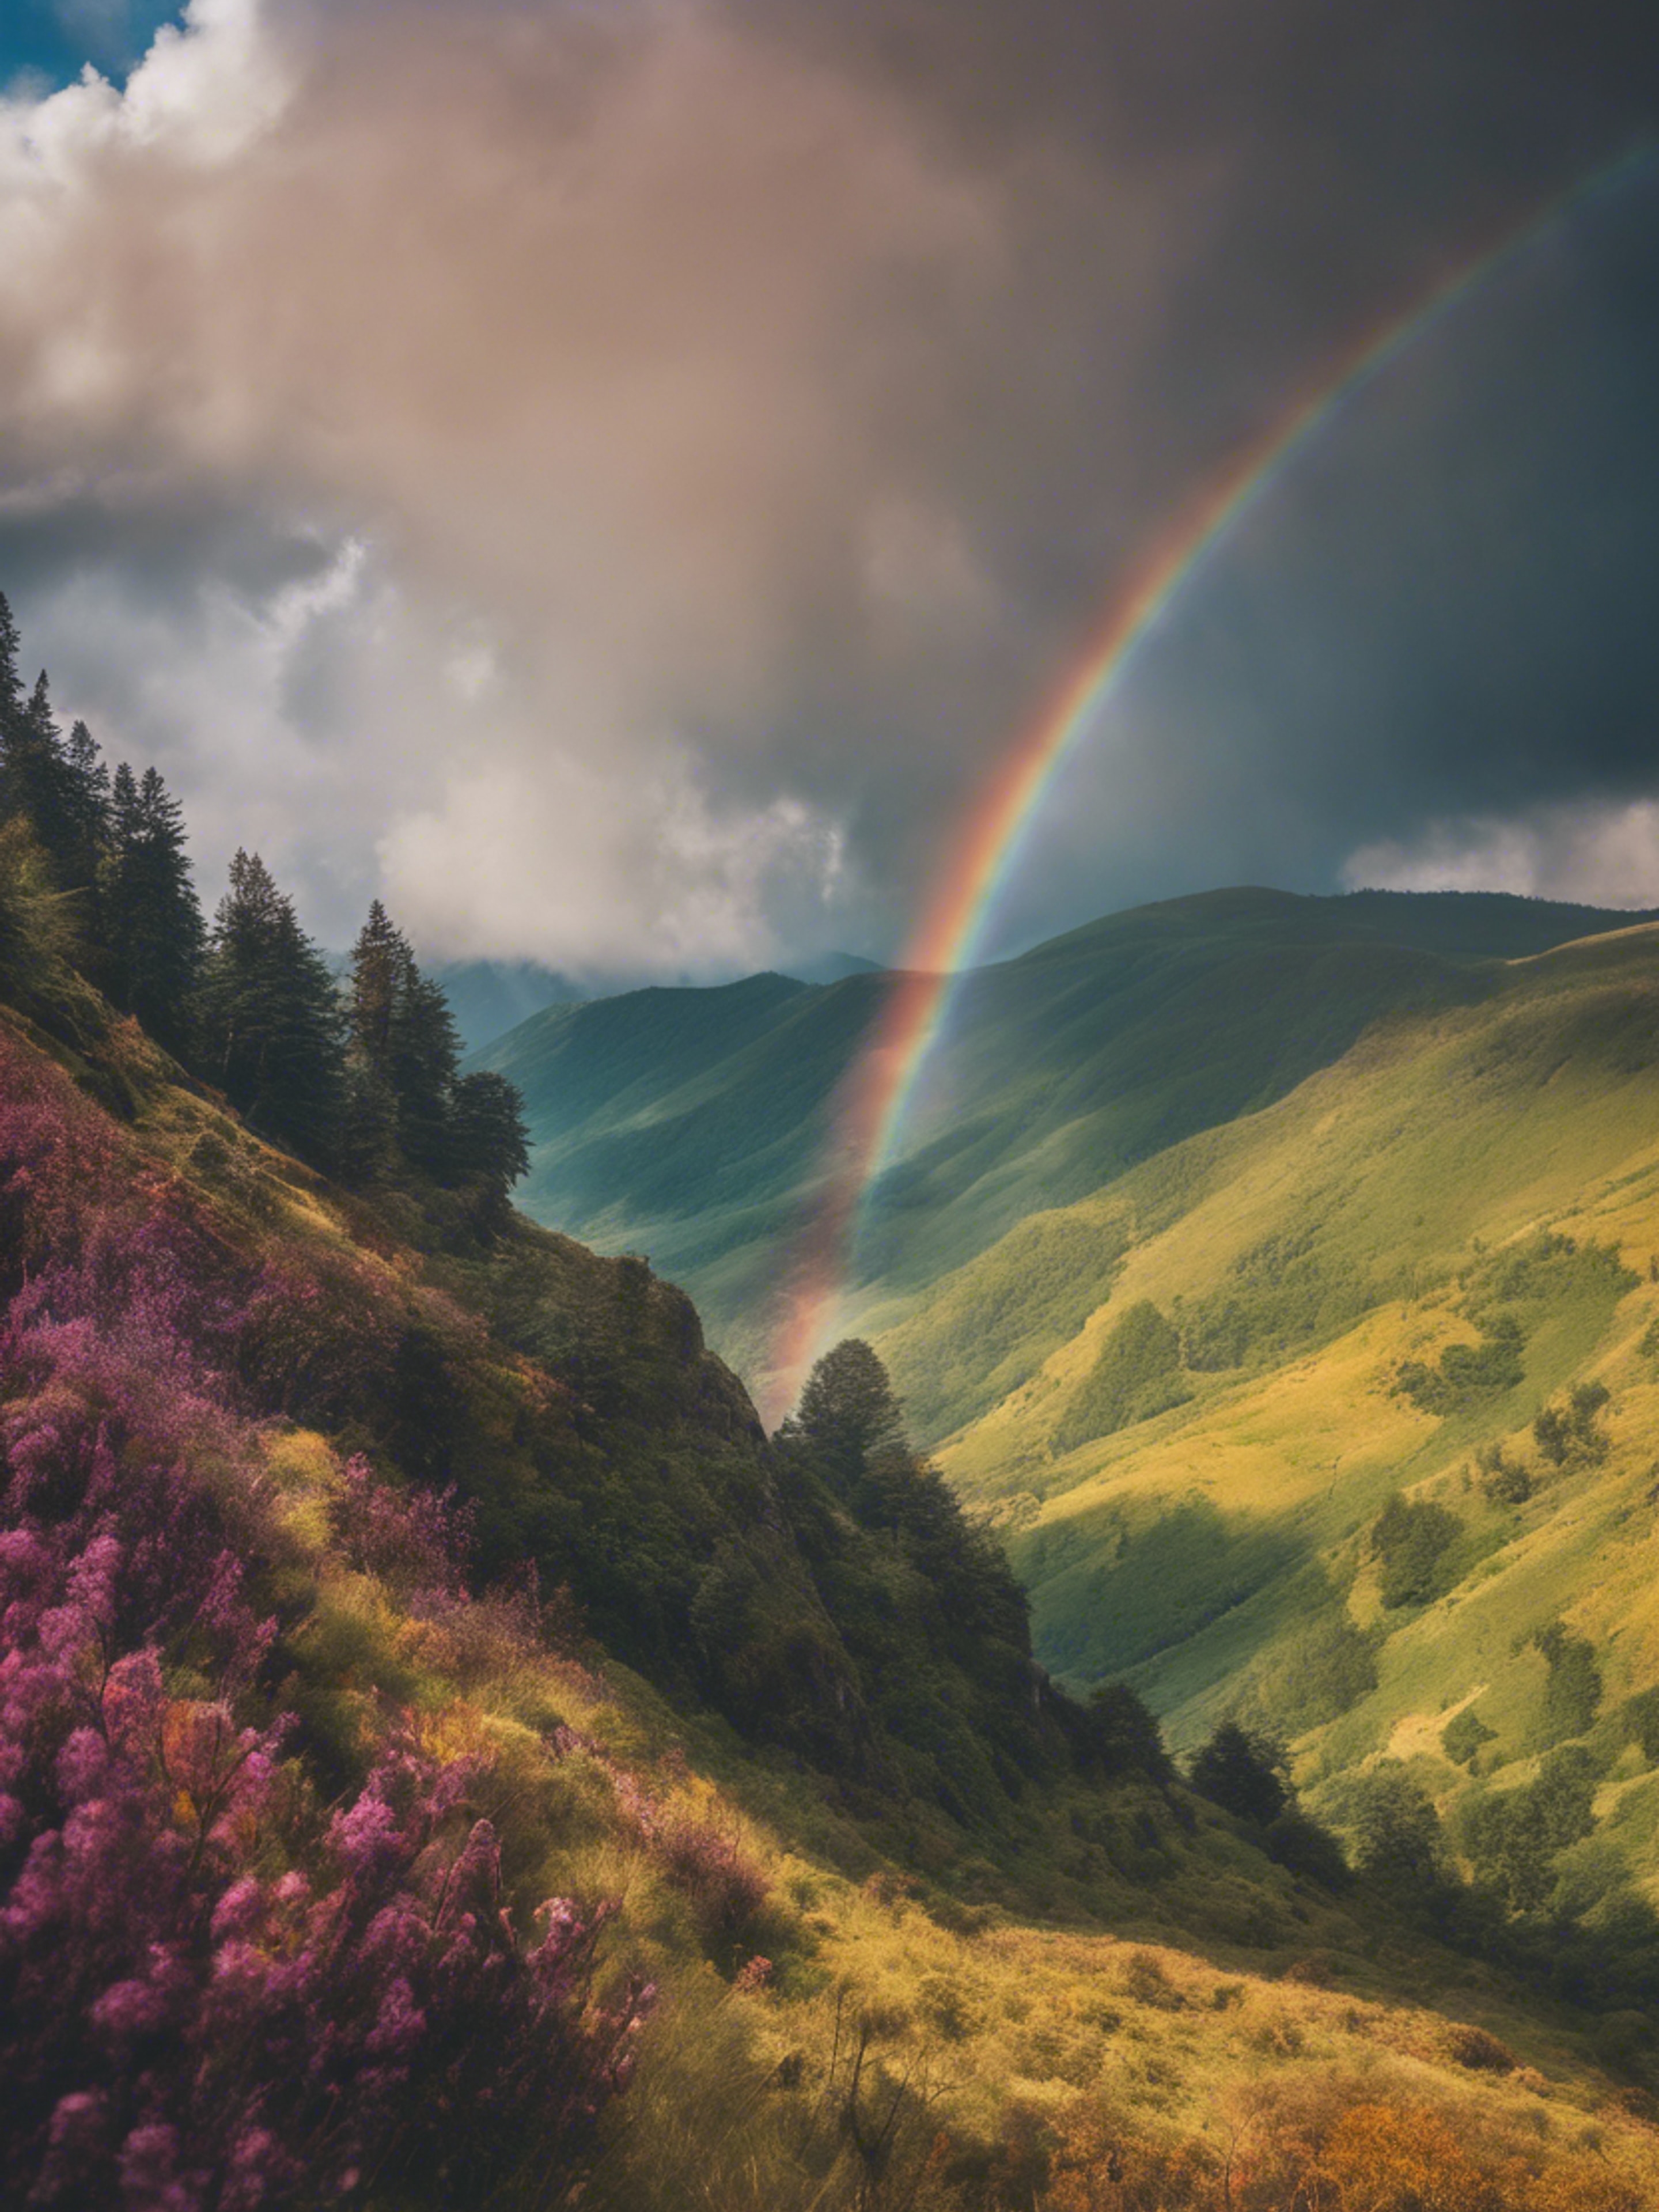 A majestic boho rainbow seen from a mountainous landscape.壁紙[3c1707e1fd3c4ff0a146]